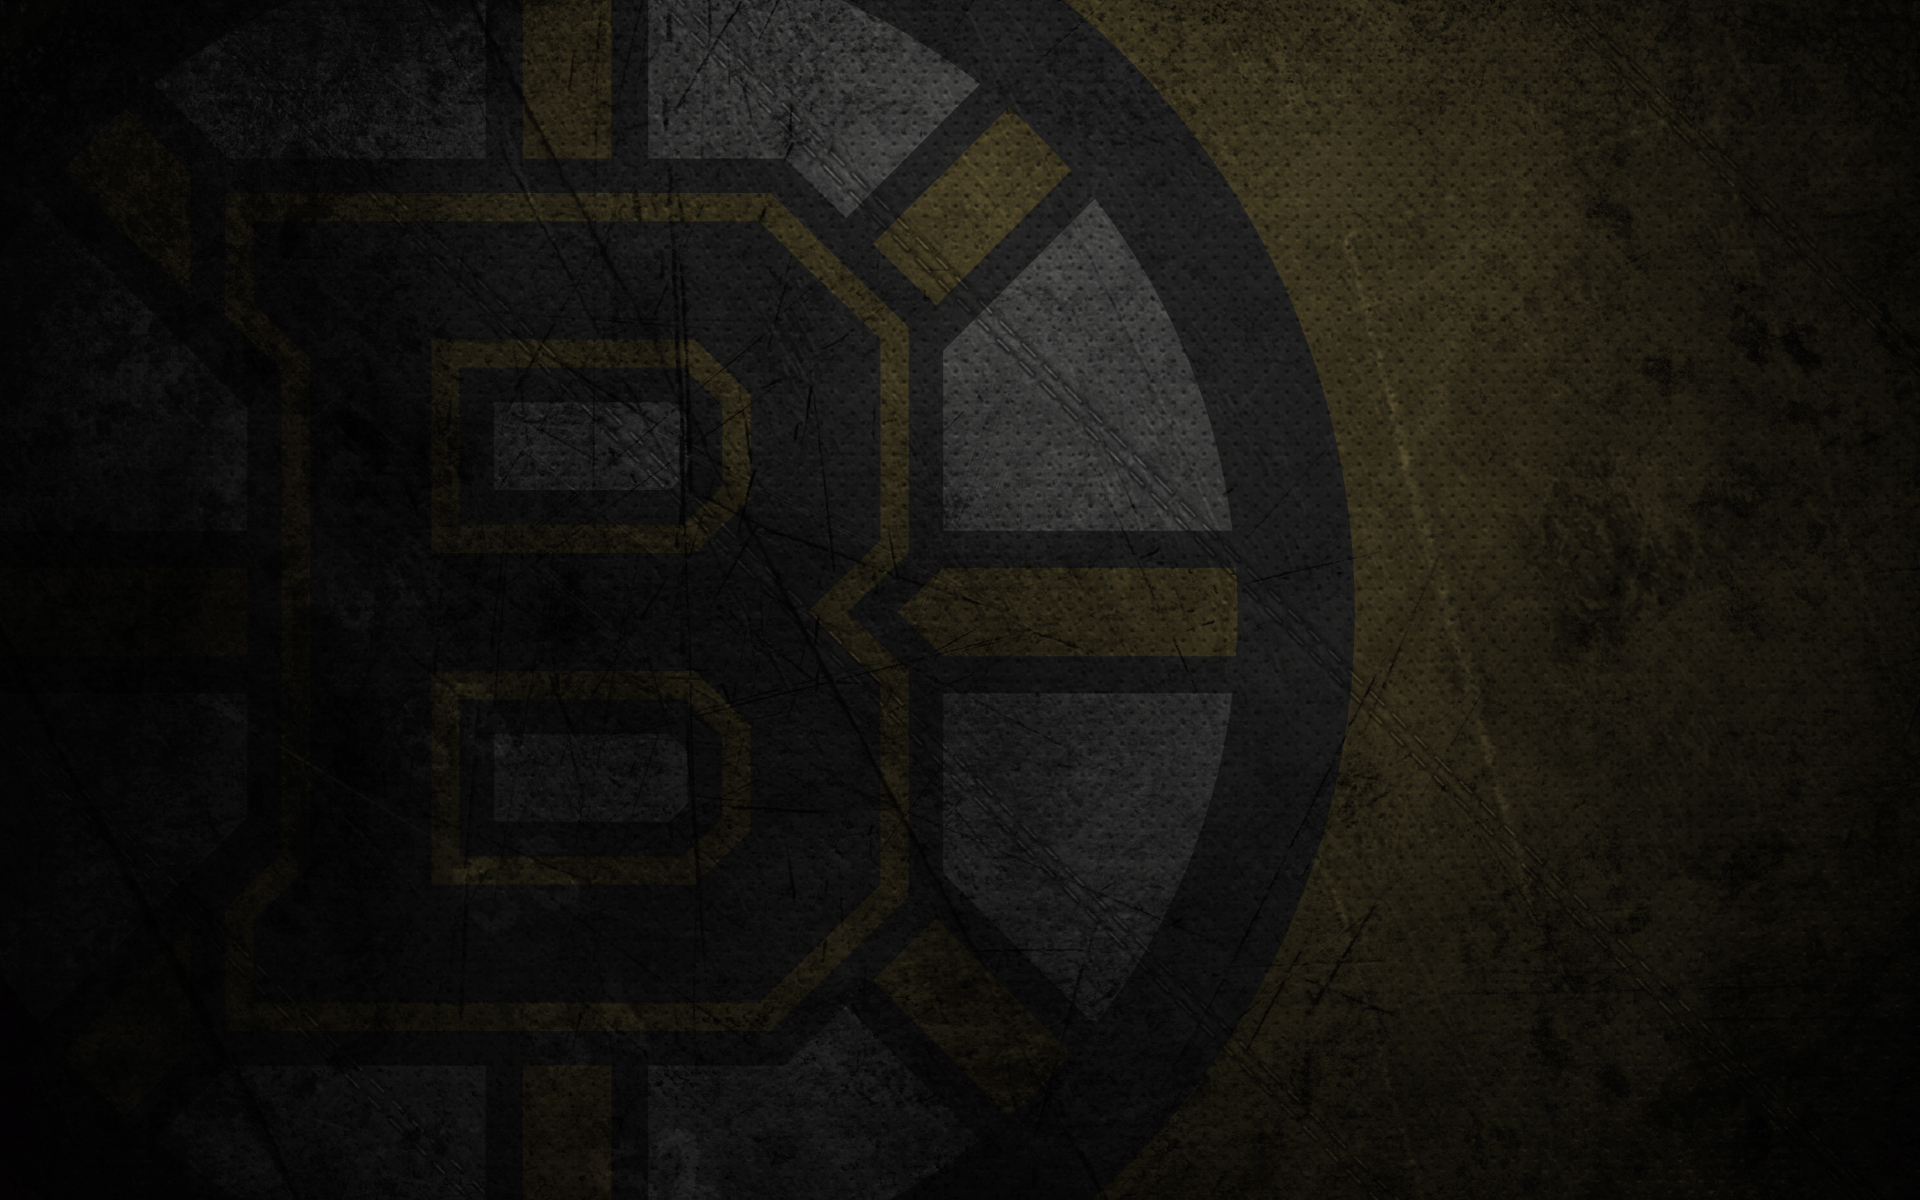 Boston Bruins Image Logo HD Wallpaper And